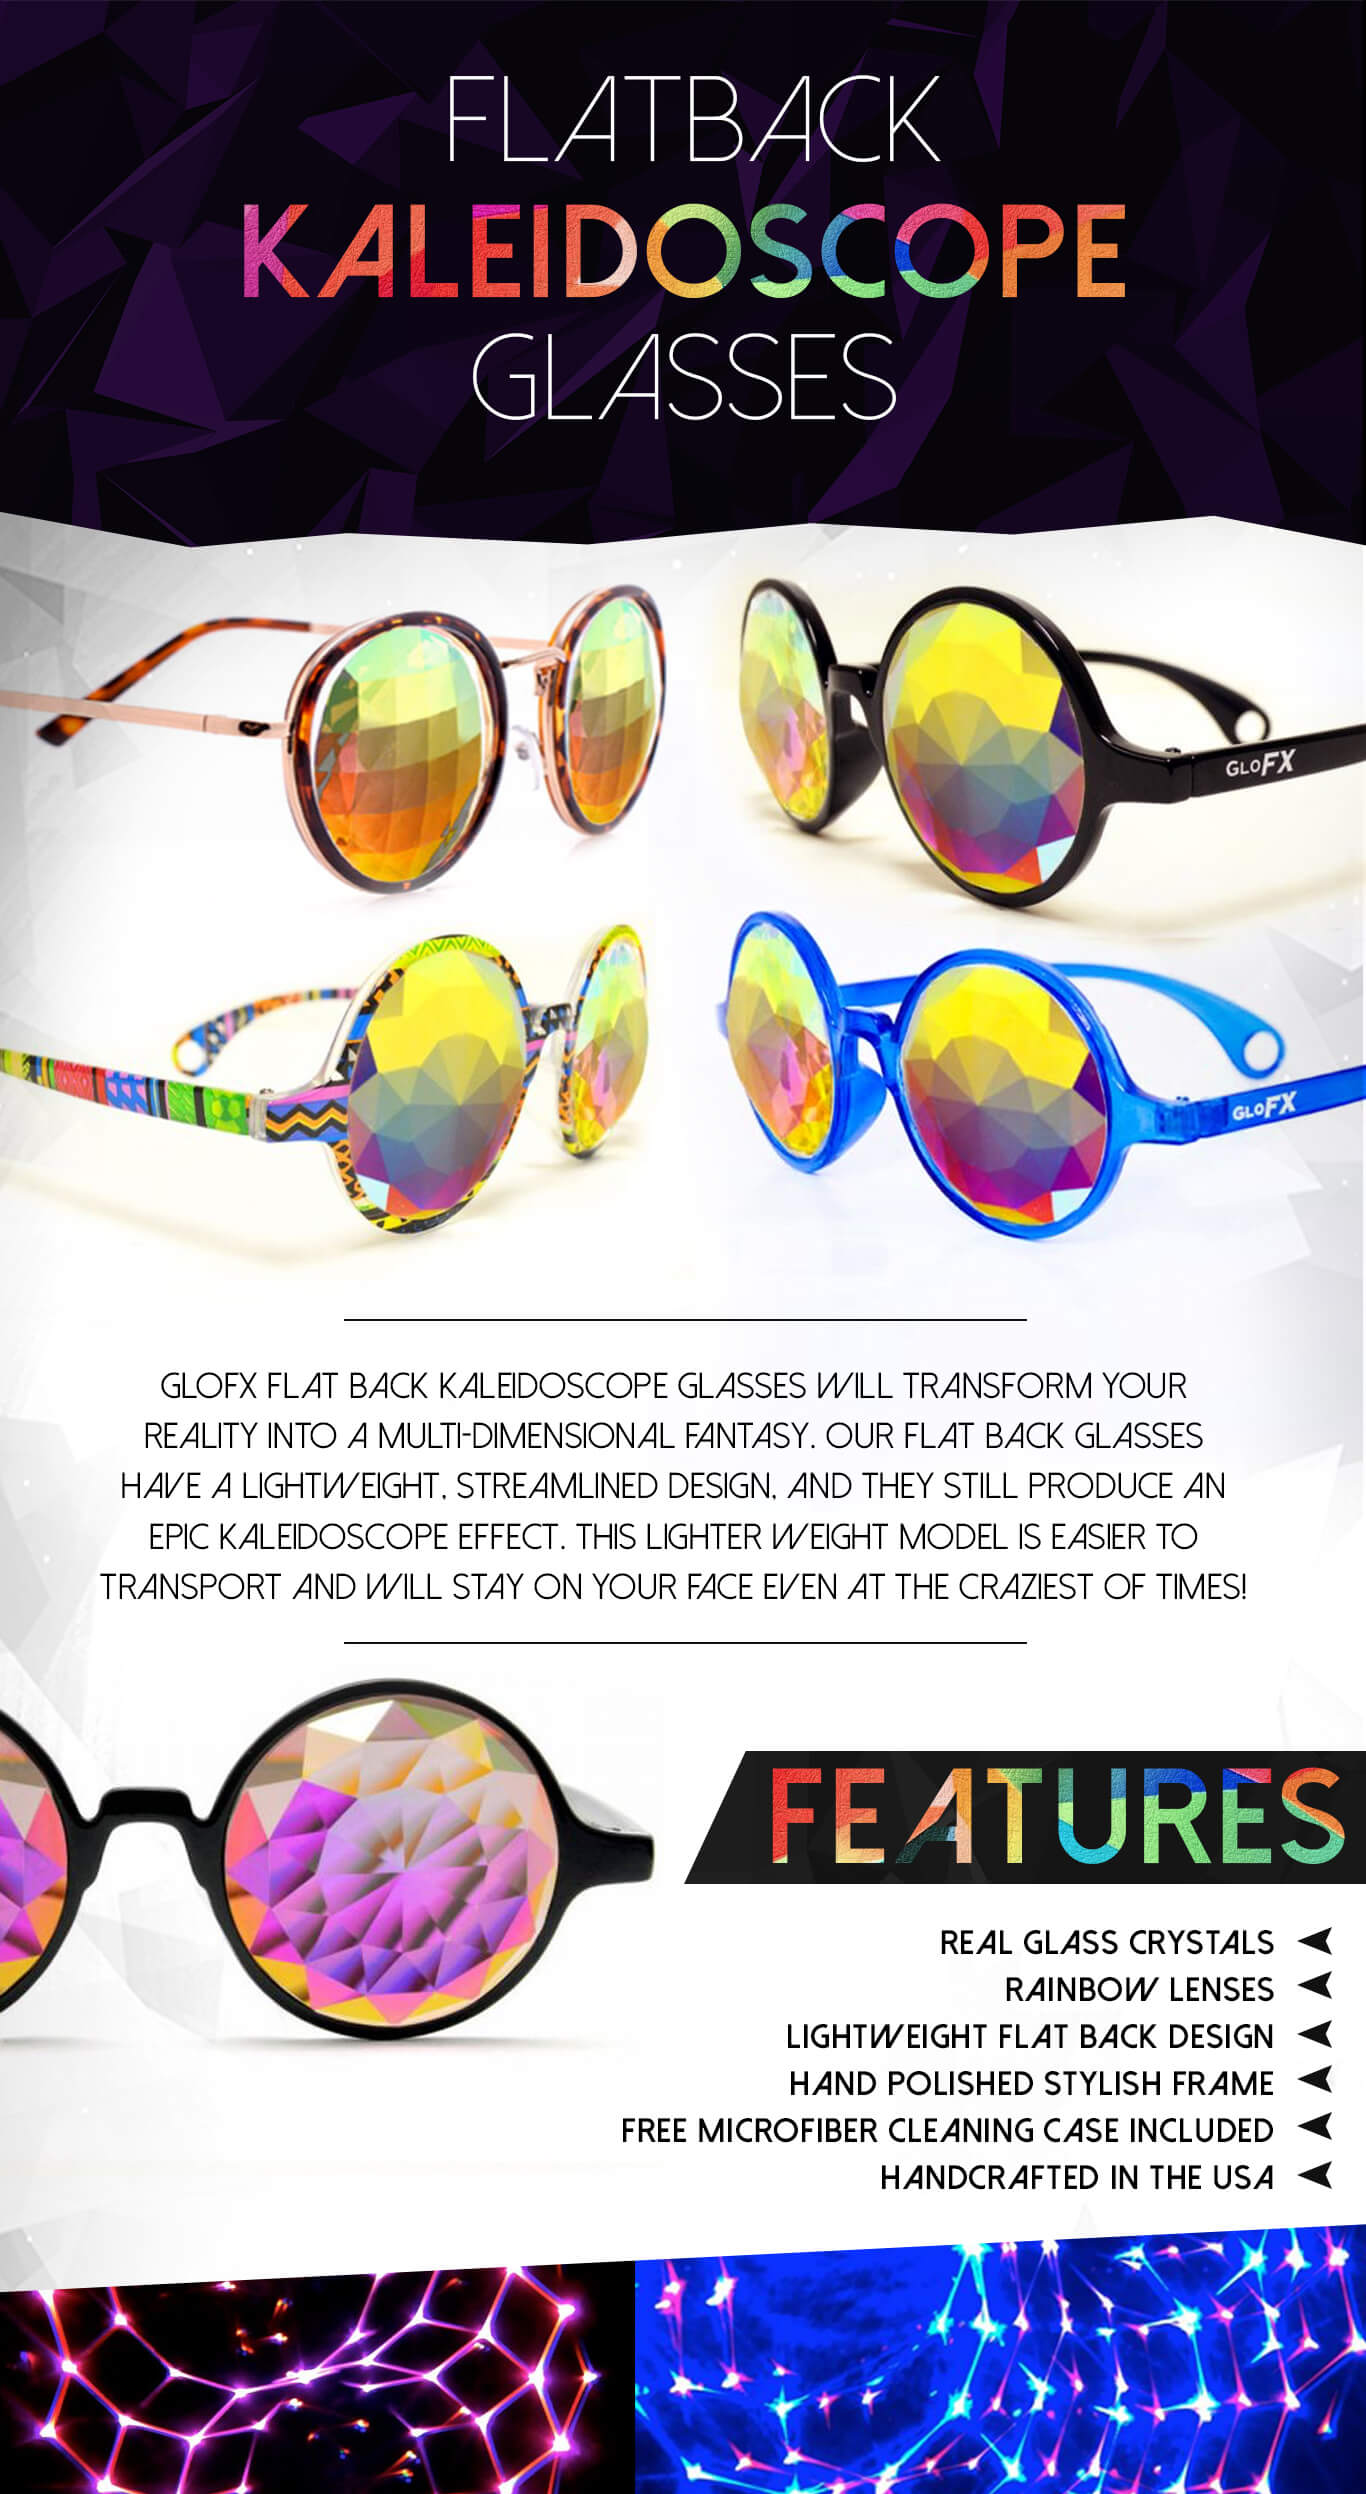 Flatback Kaleidoscope Glasses Category Admat